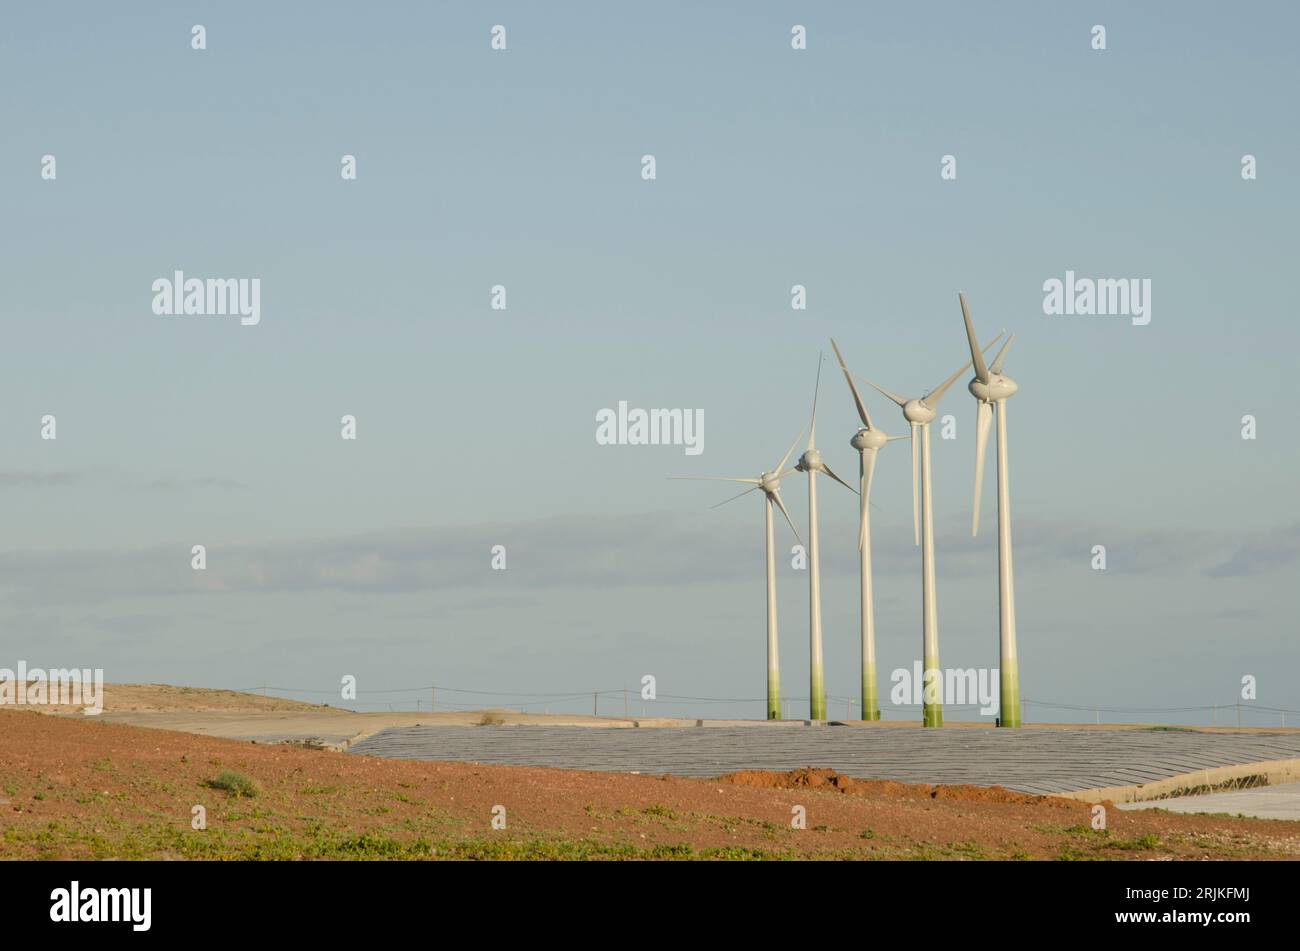 Arinaga, 3 mars 2021 : Groupe d'éoliennes. Aguimes. Gran Canaria. Îles Canaries. Espagne. Banque D'Images